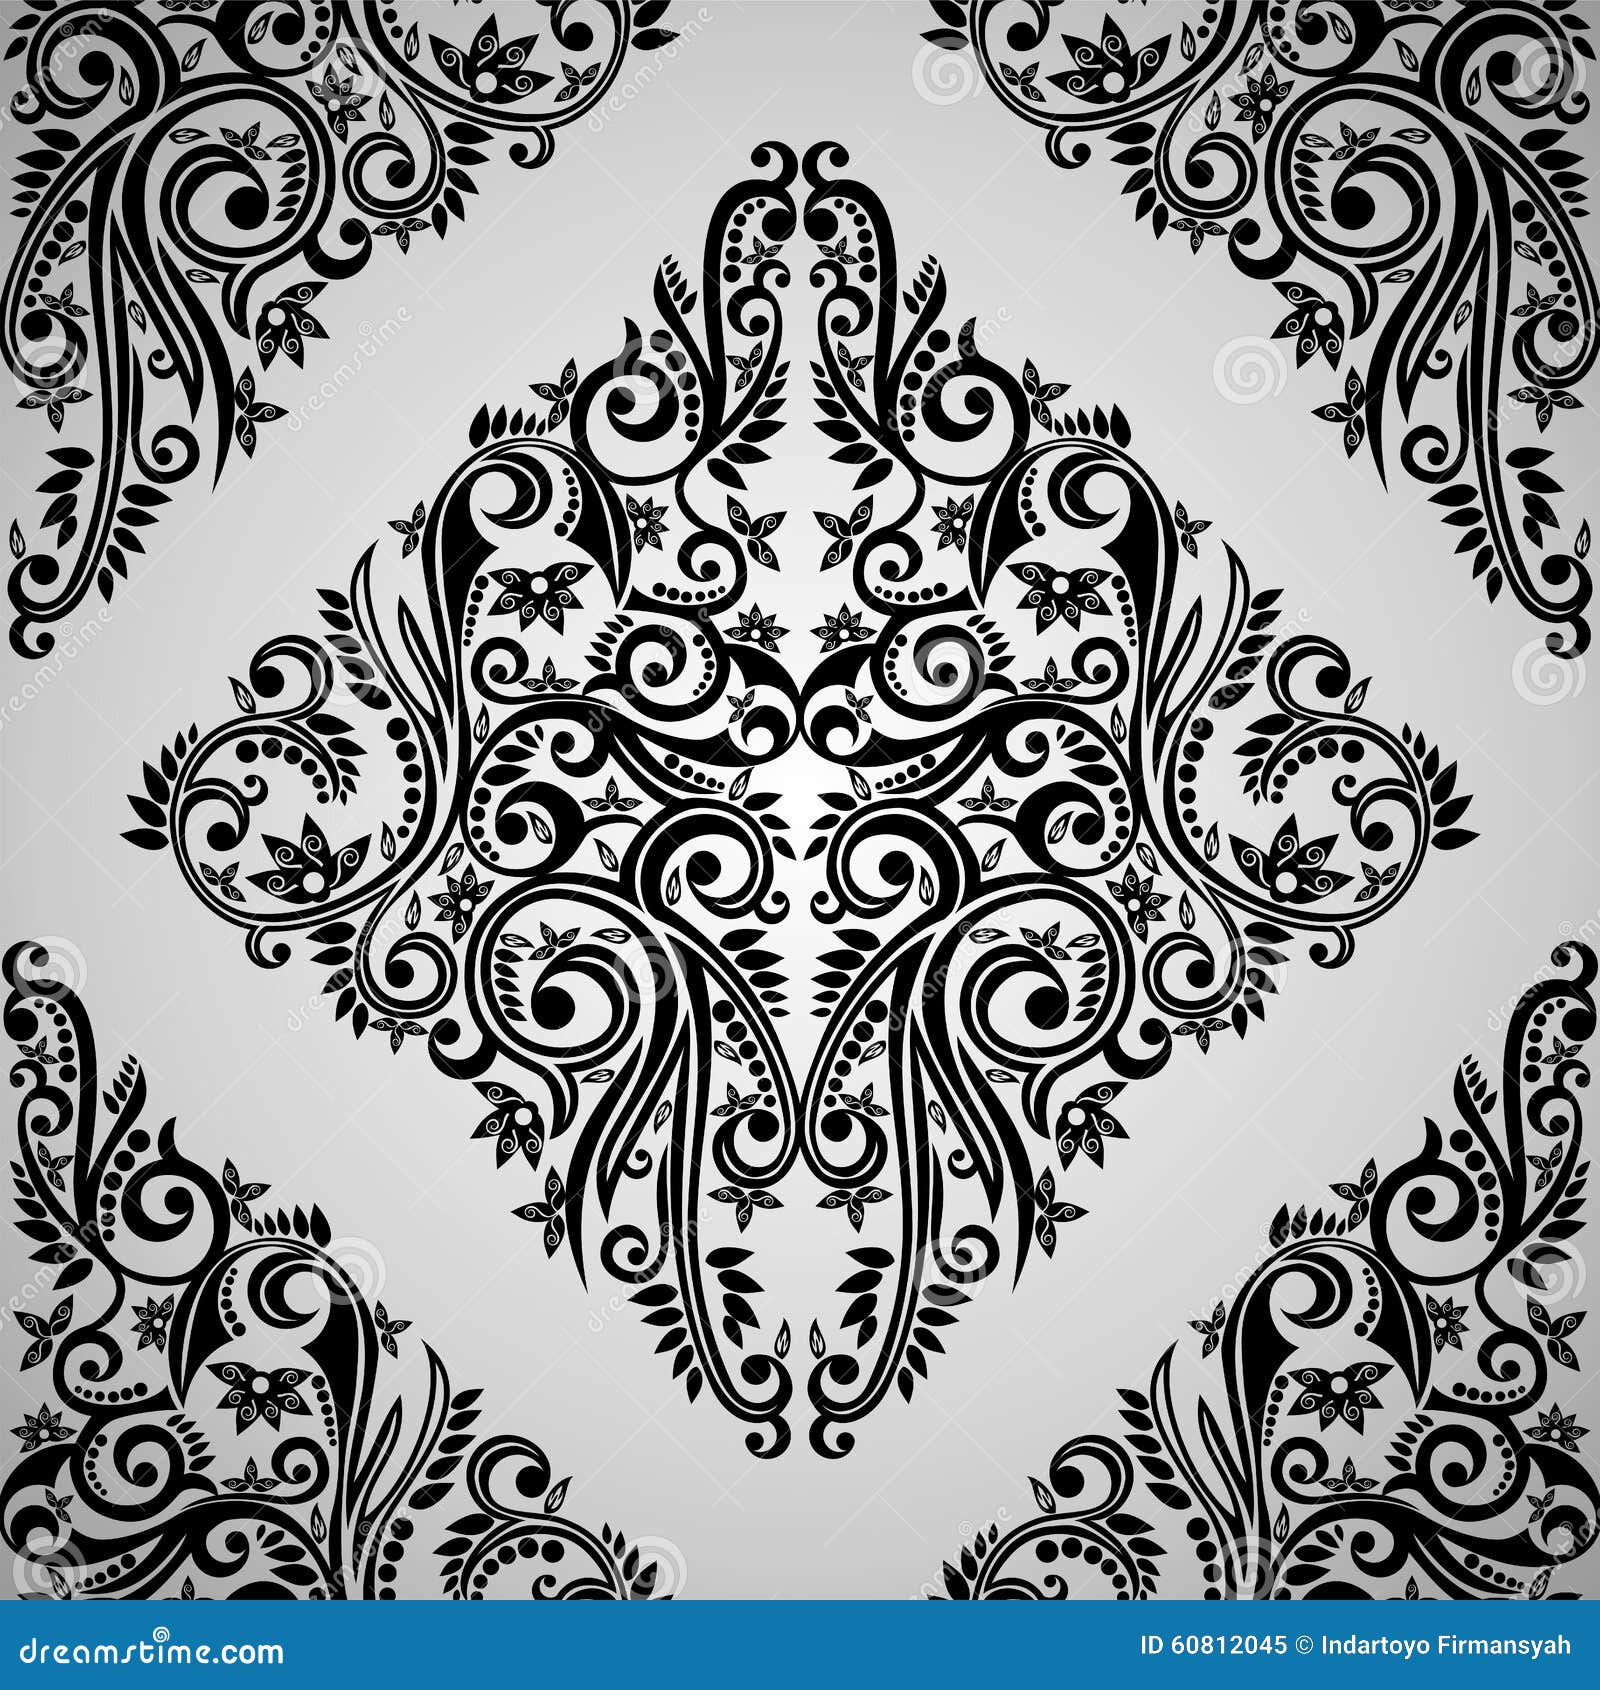 Wallpaper Batik Abstract Tile With Swirl Stock Illustration